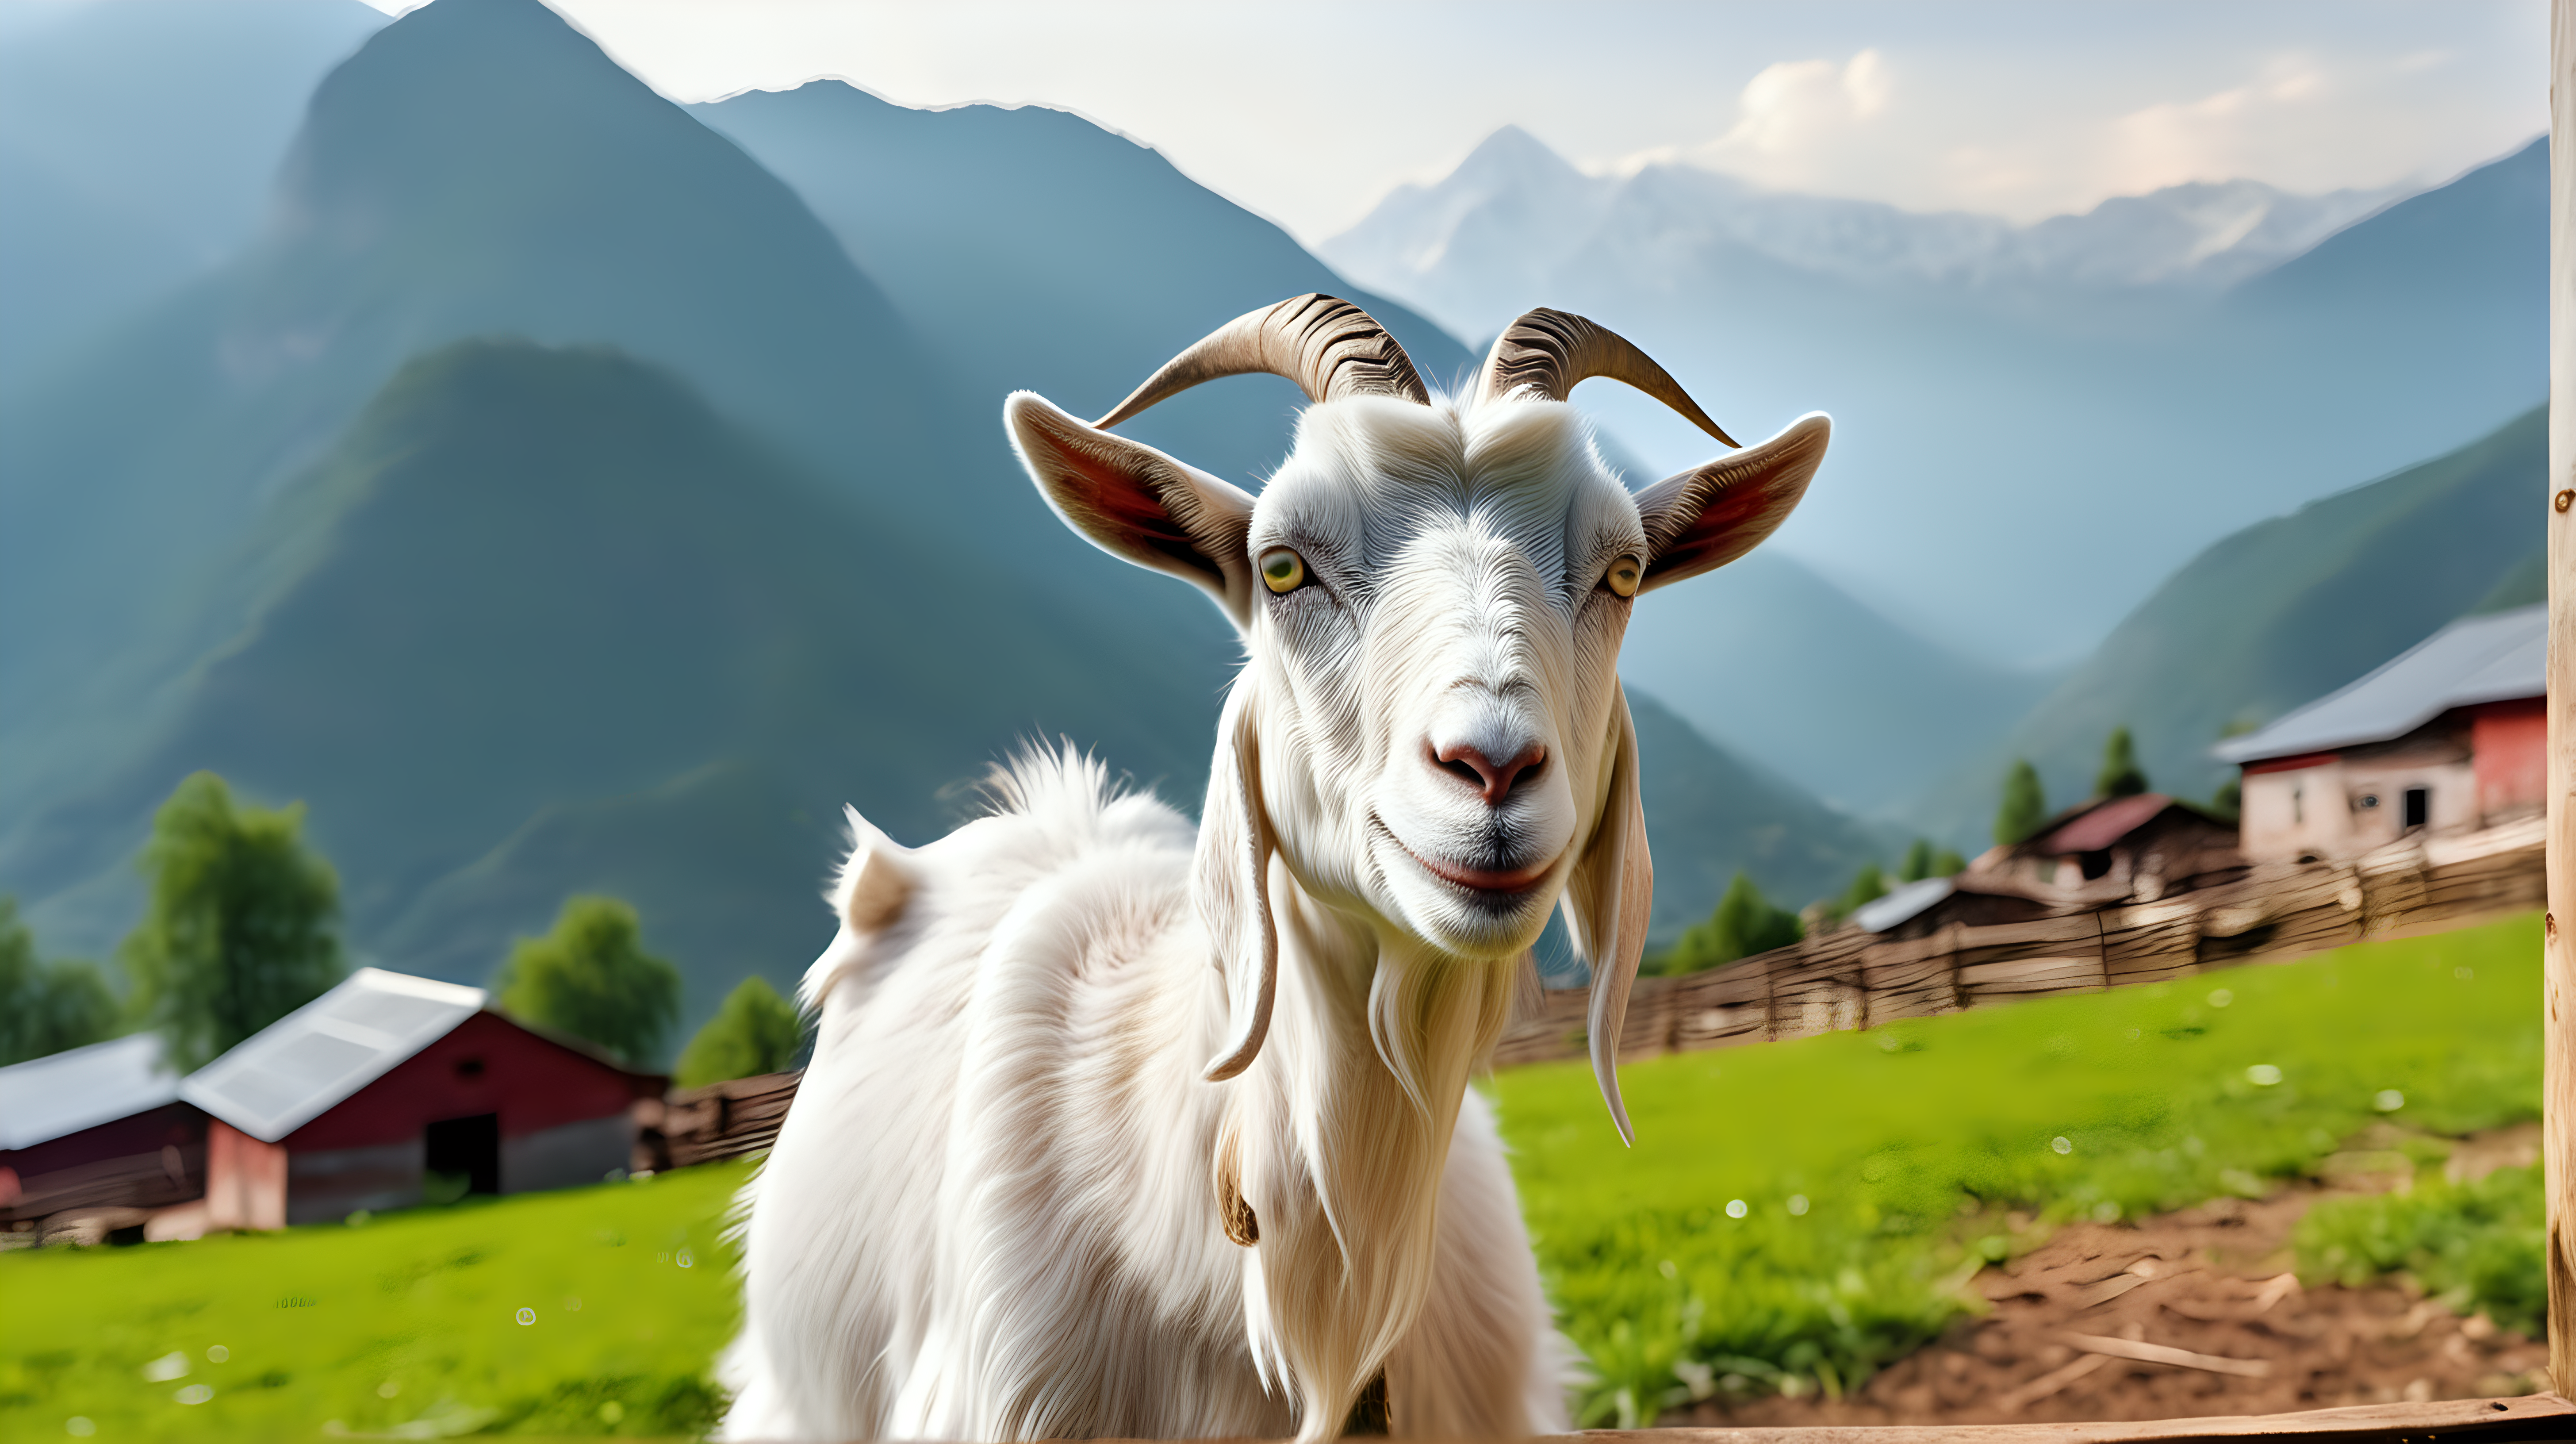 Healty goat in farm, mountain background